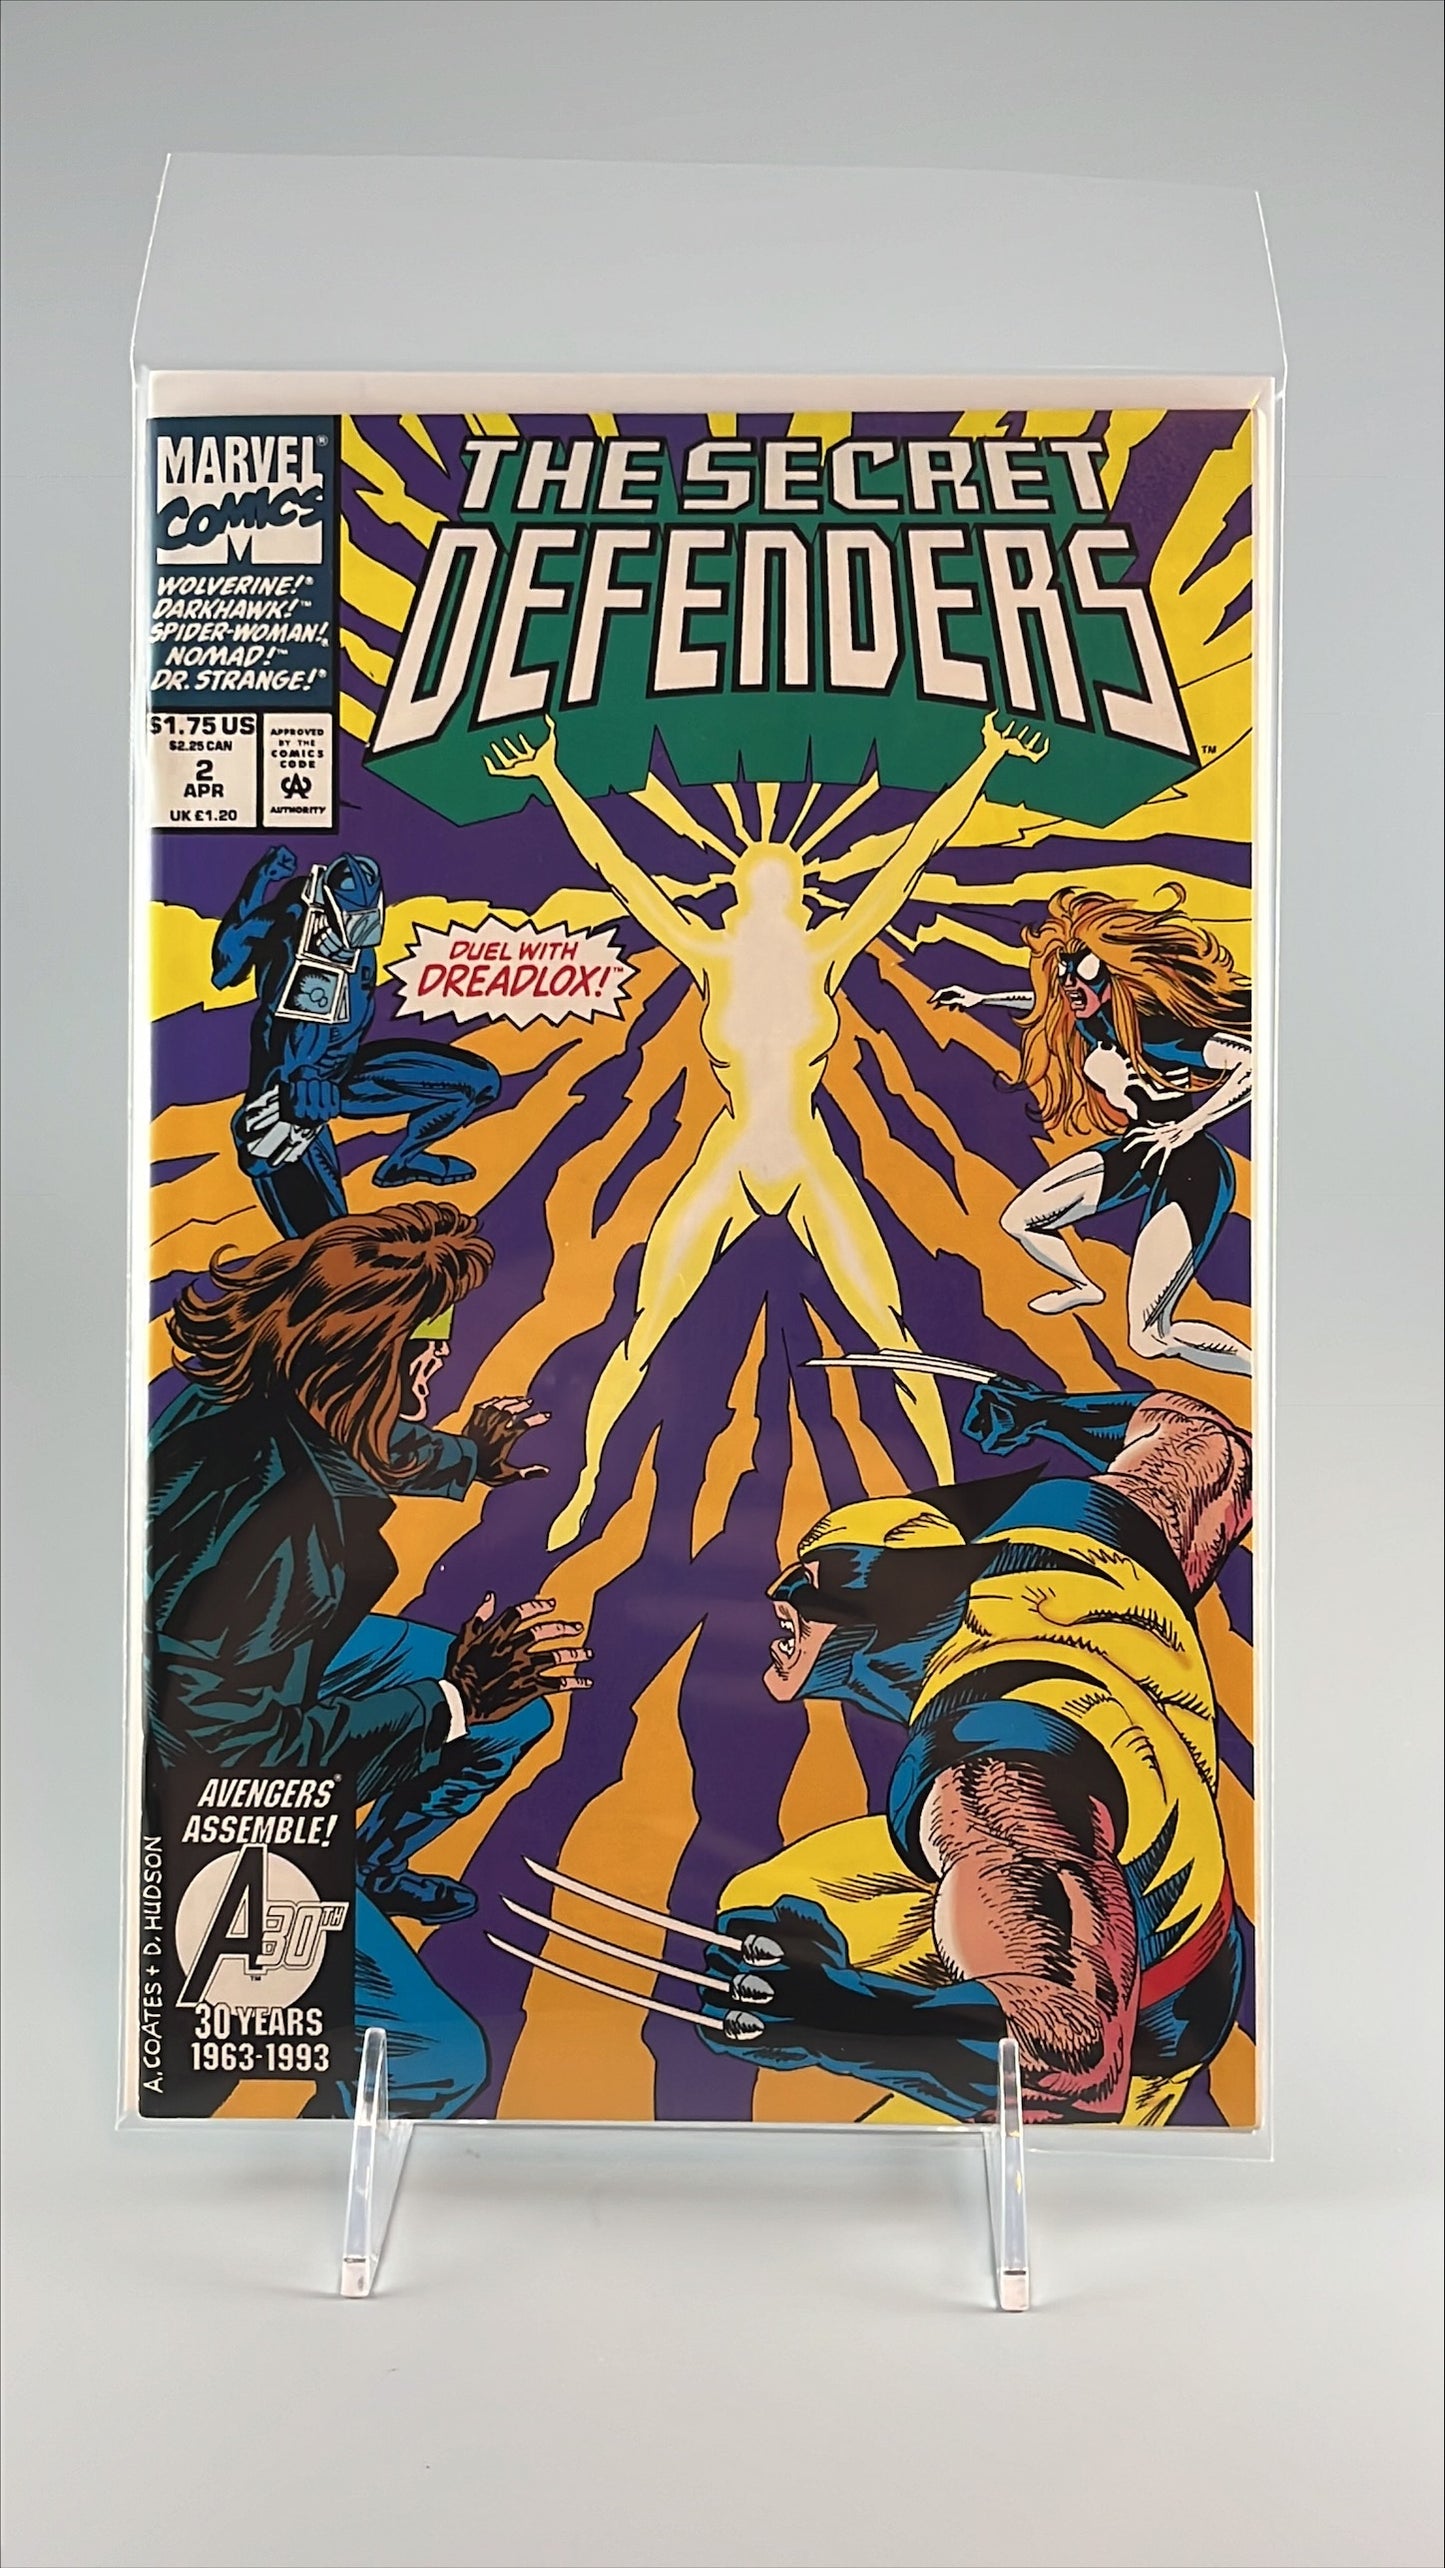 The Secret Defenders #2